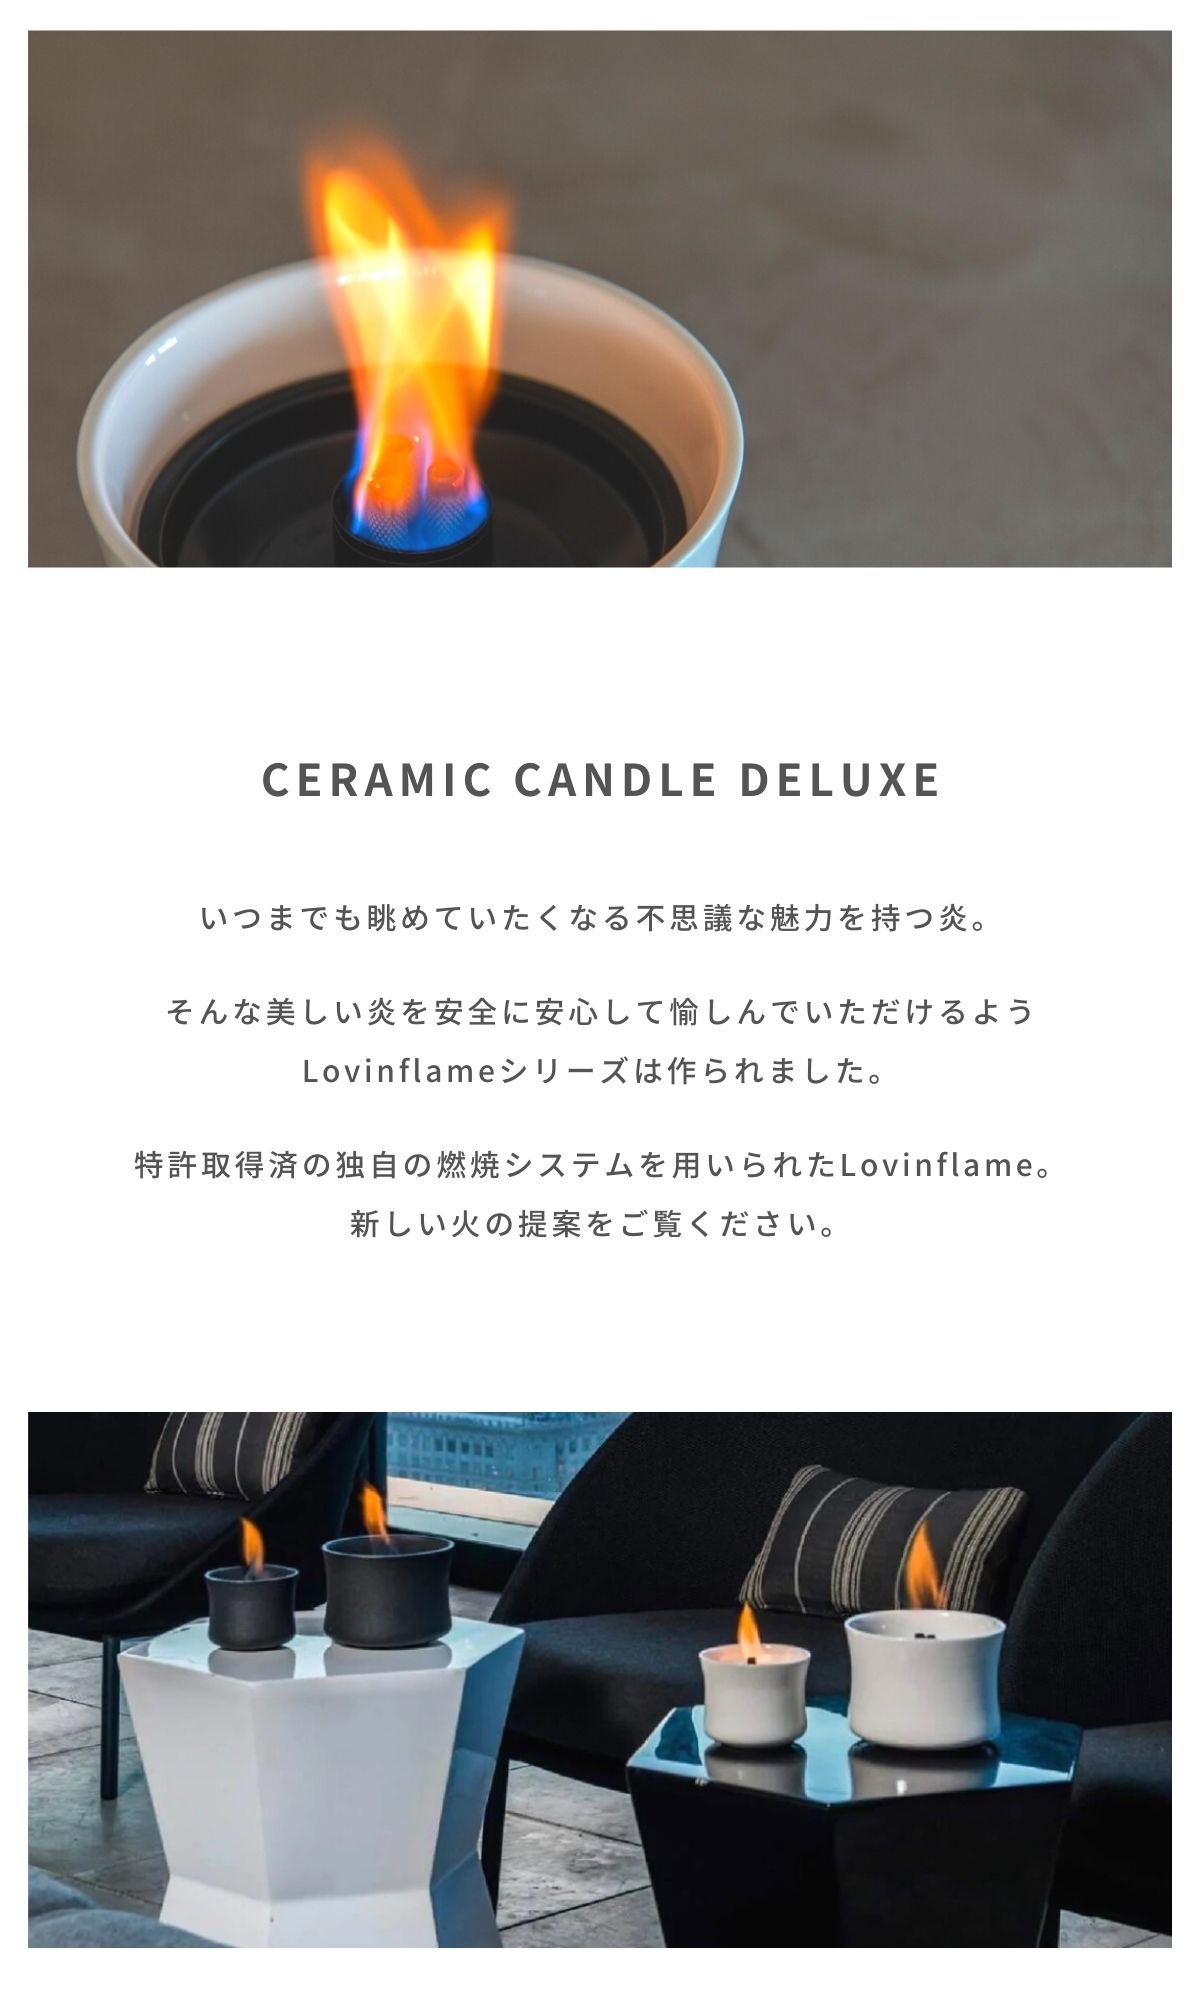 【Lovinflame セラミックキャンドルデラックス】の商品情報詳細